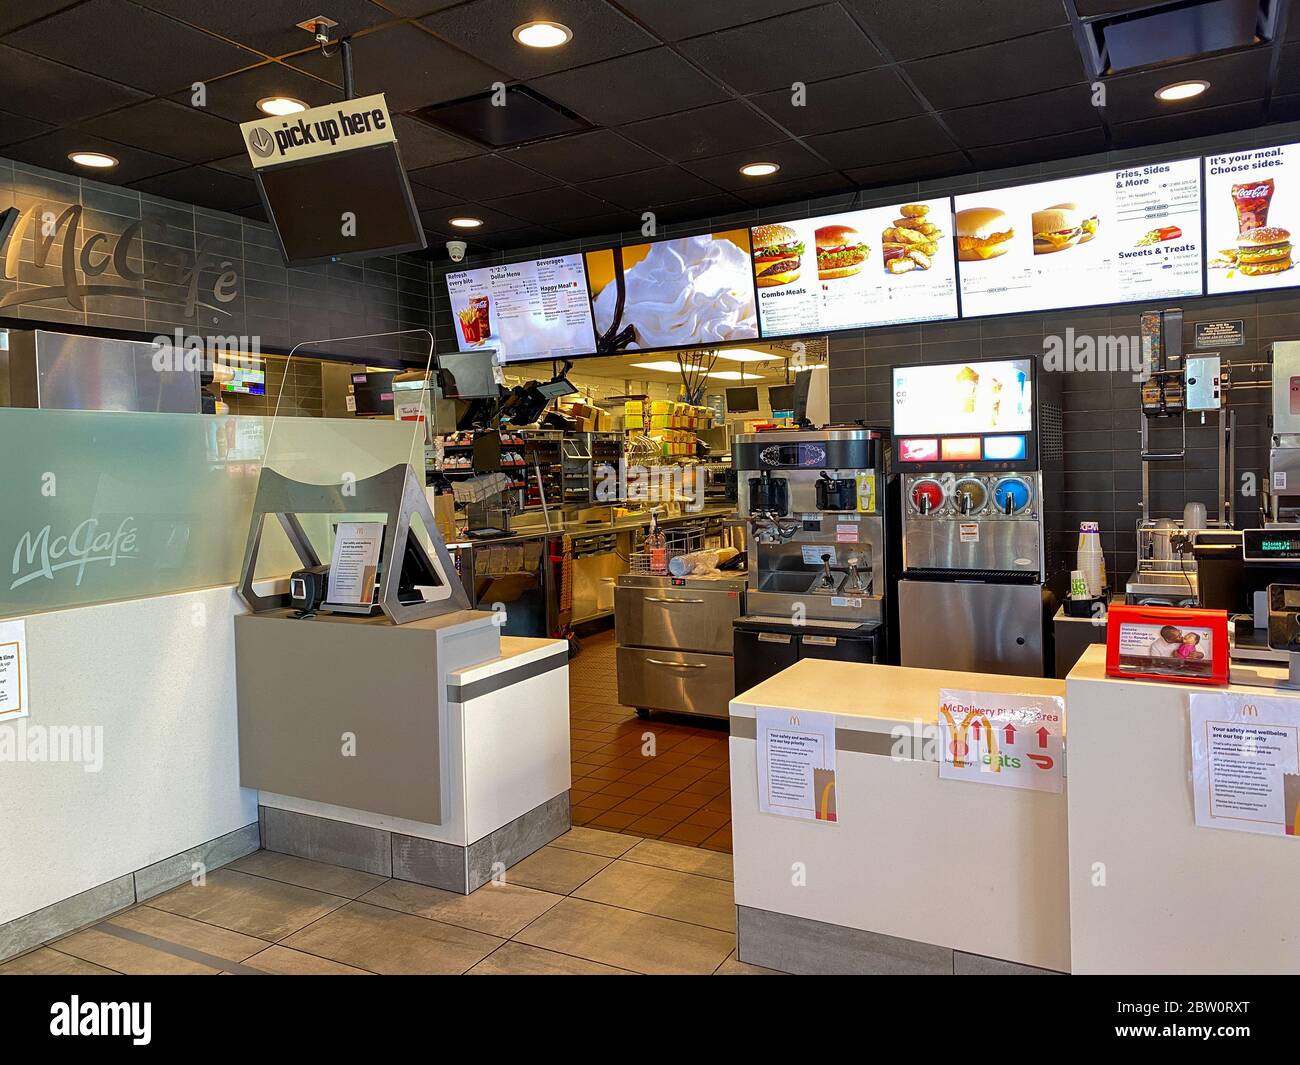 Orlando,FL/USA -5/3/20:  The kitchen at a McDonald's fast food restaurant. Stock Photo